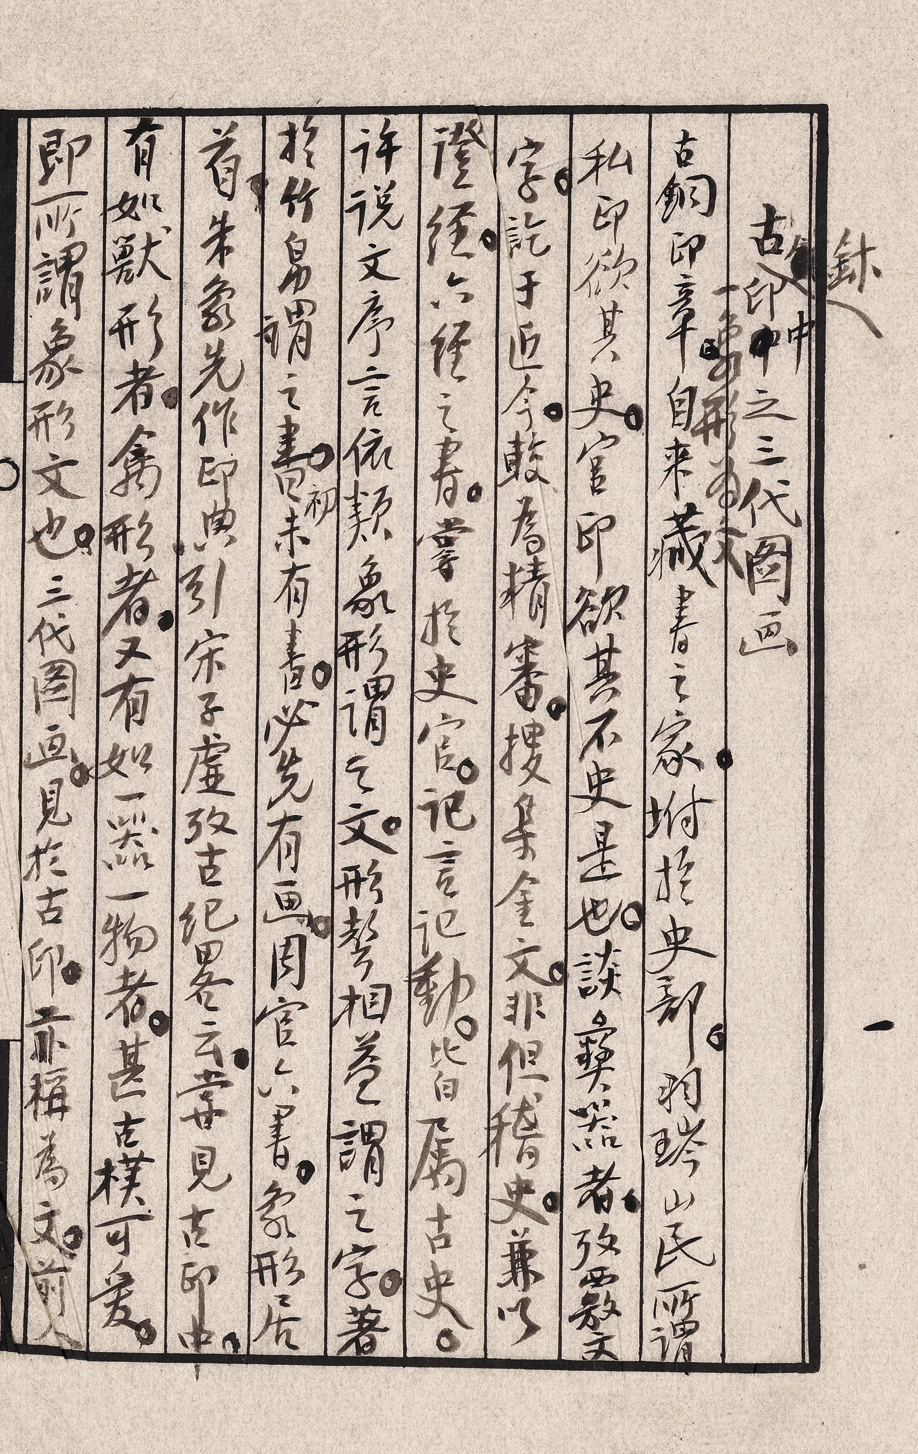 1939 Manuscript of Huang Binhong's "Three Generations of Pictures in Ancient Seals" (part)